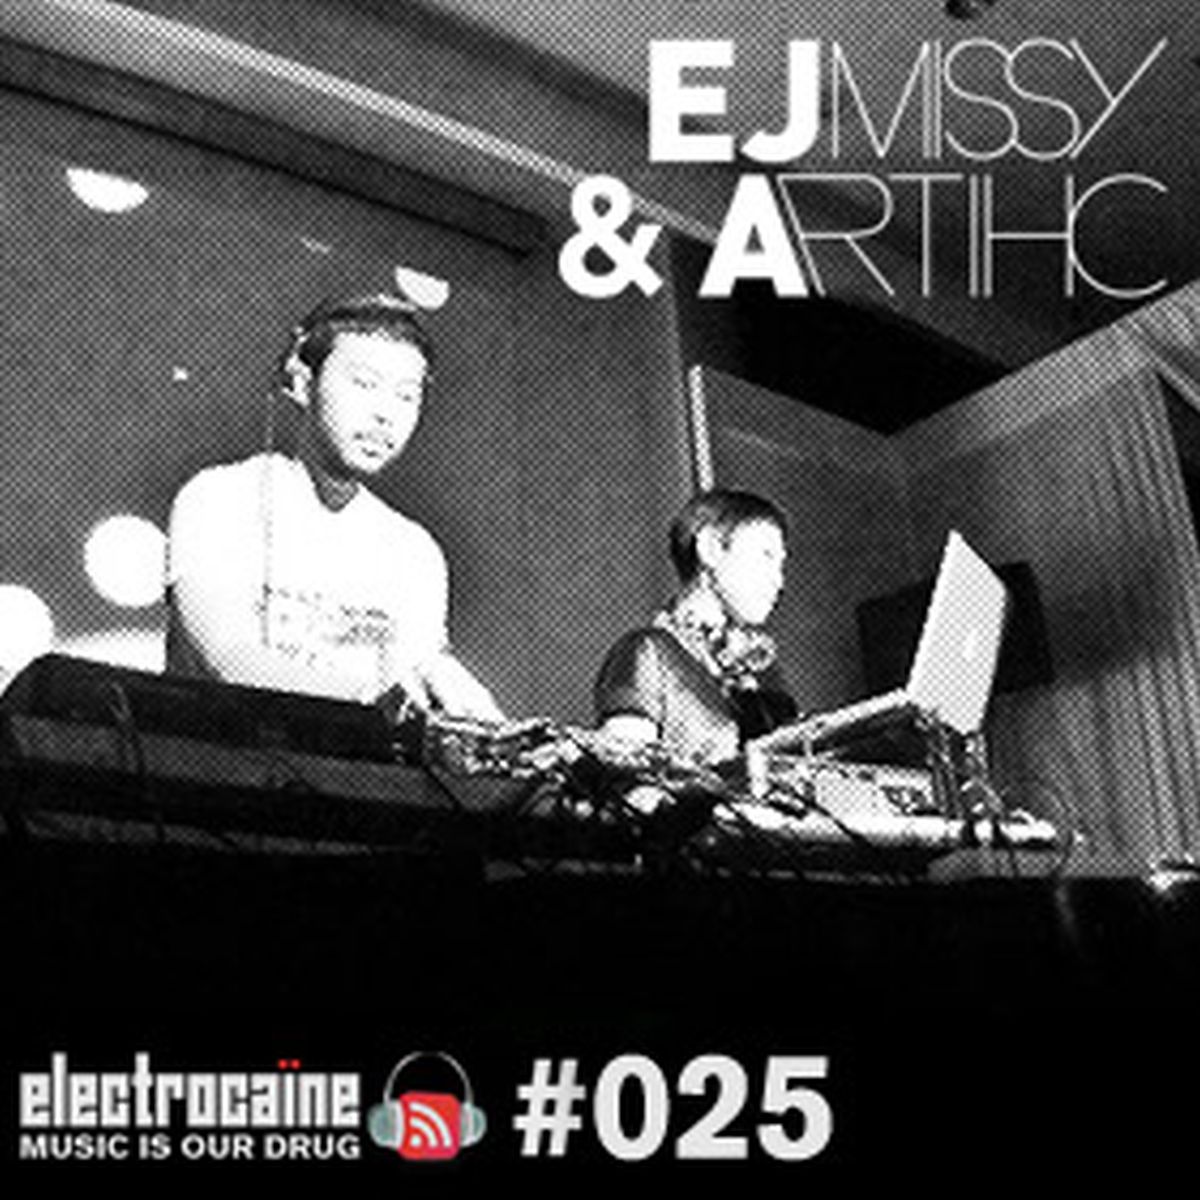 session #025 – EJ missy & Artihc live at SAM